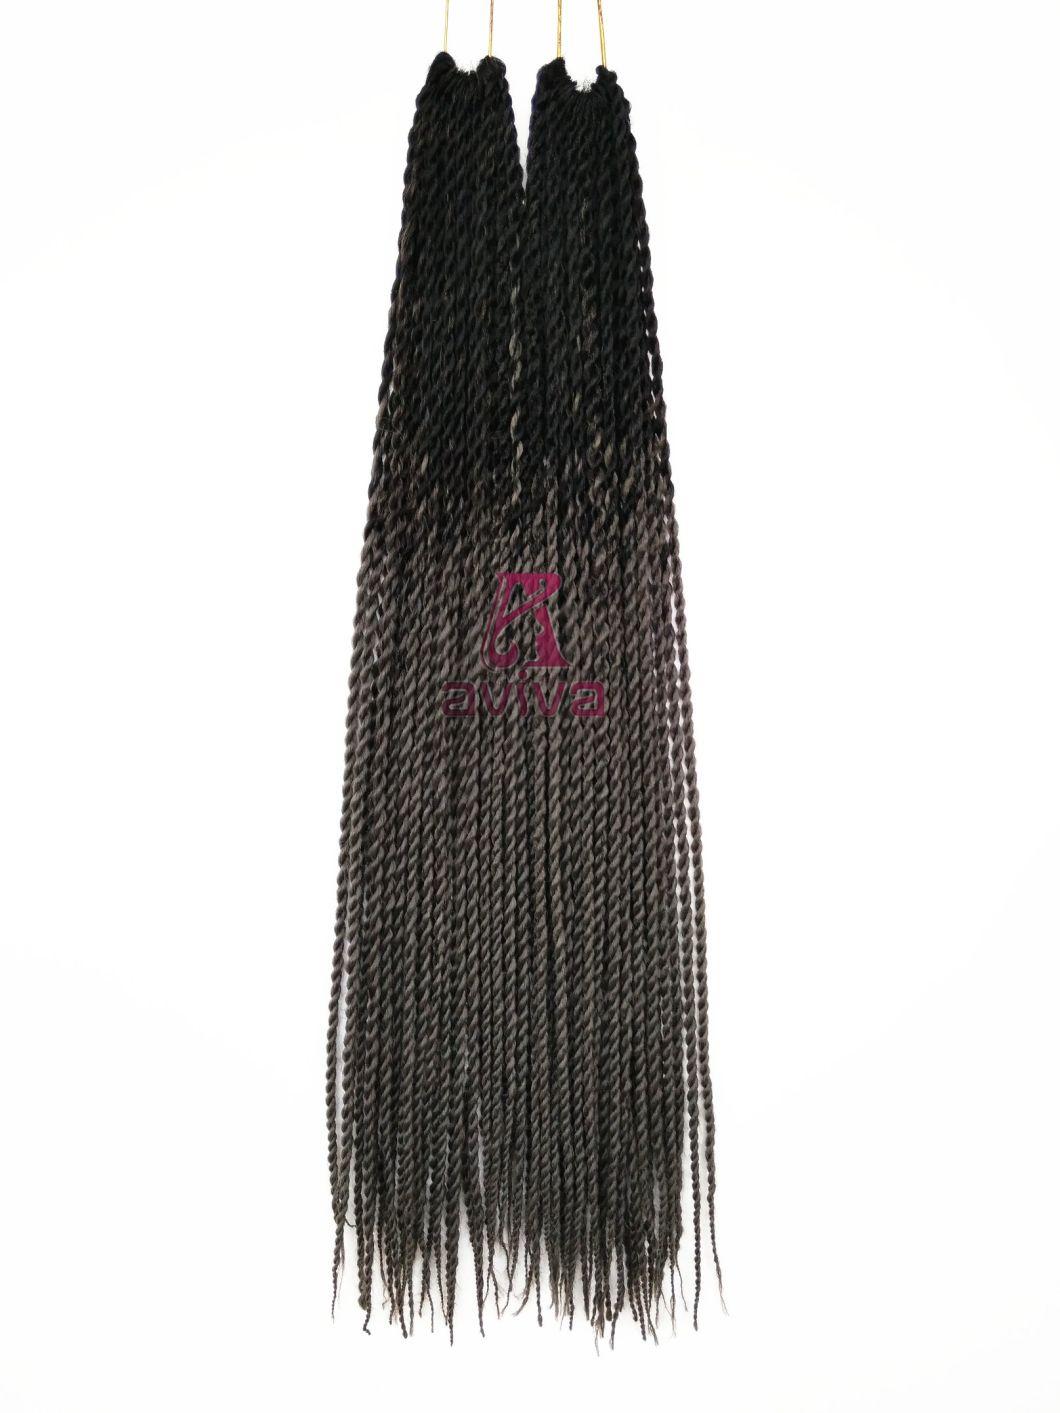 Synthetic Hair Kanekalon Twist Braiding Hair Extensions 24"/30 Strands Crochet Hair Braids